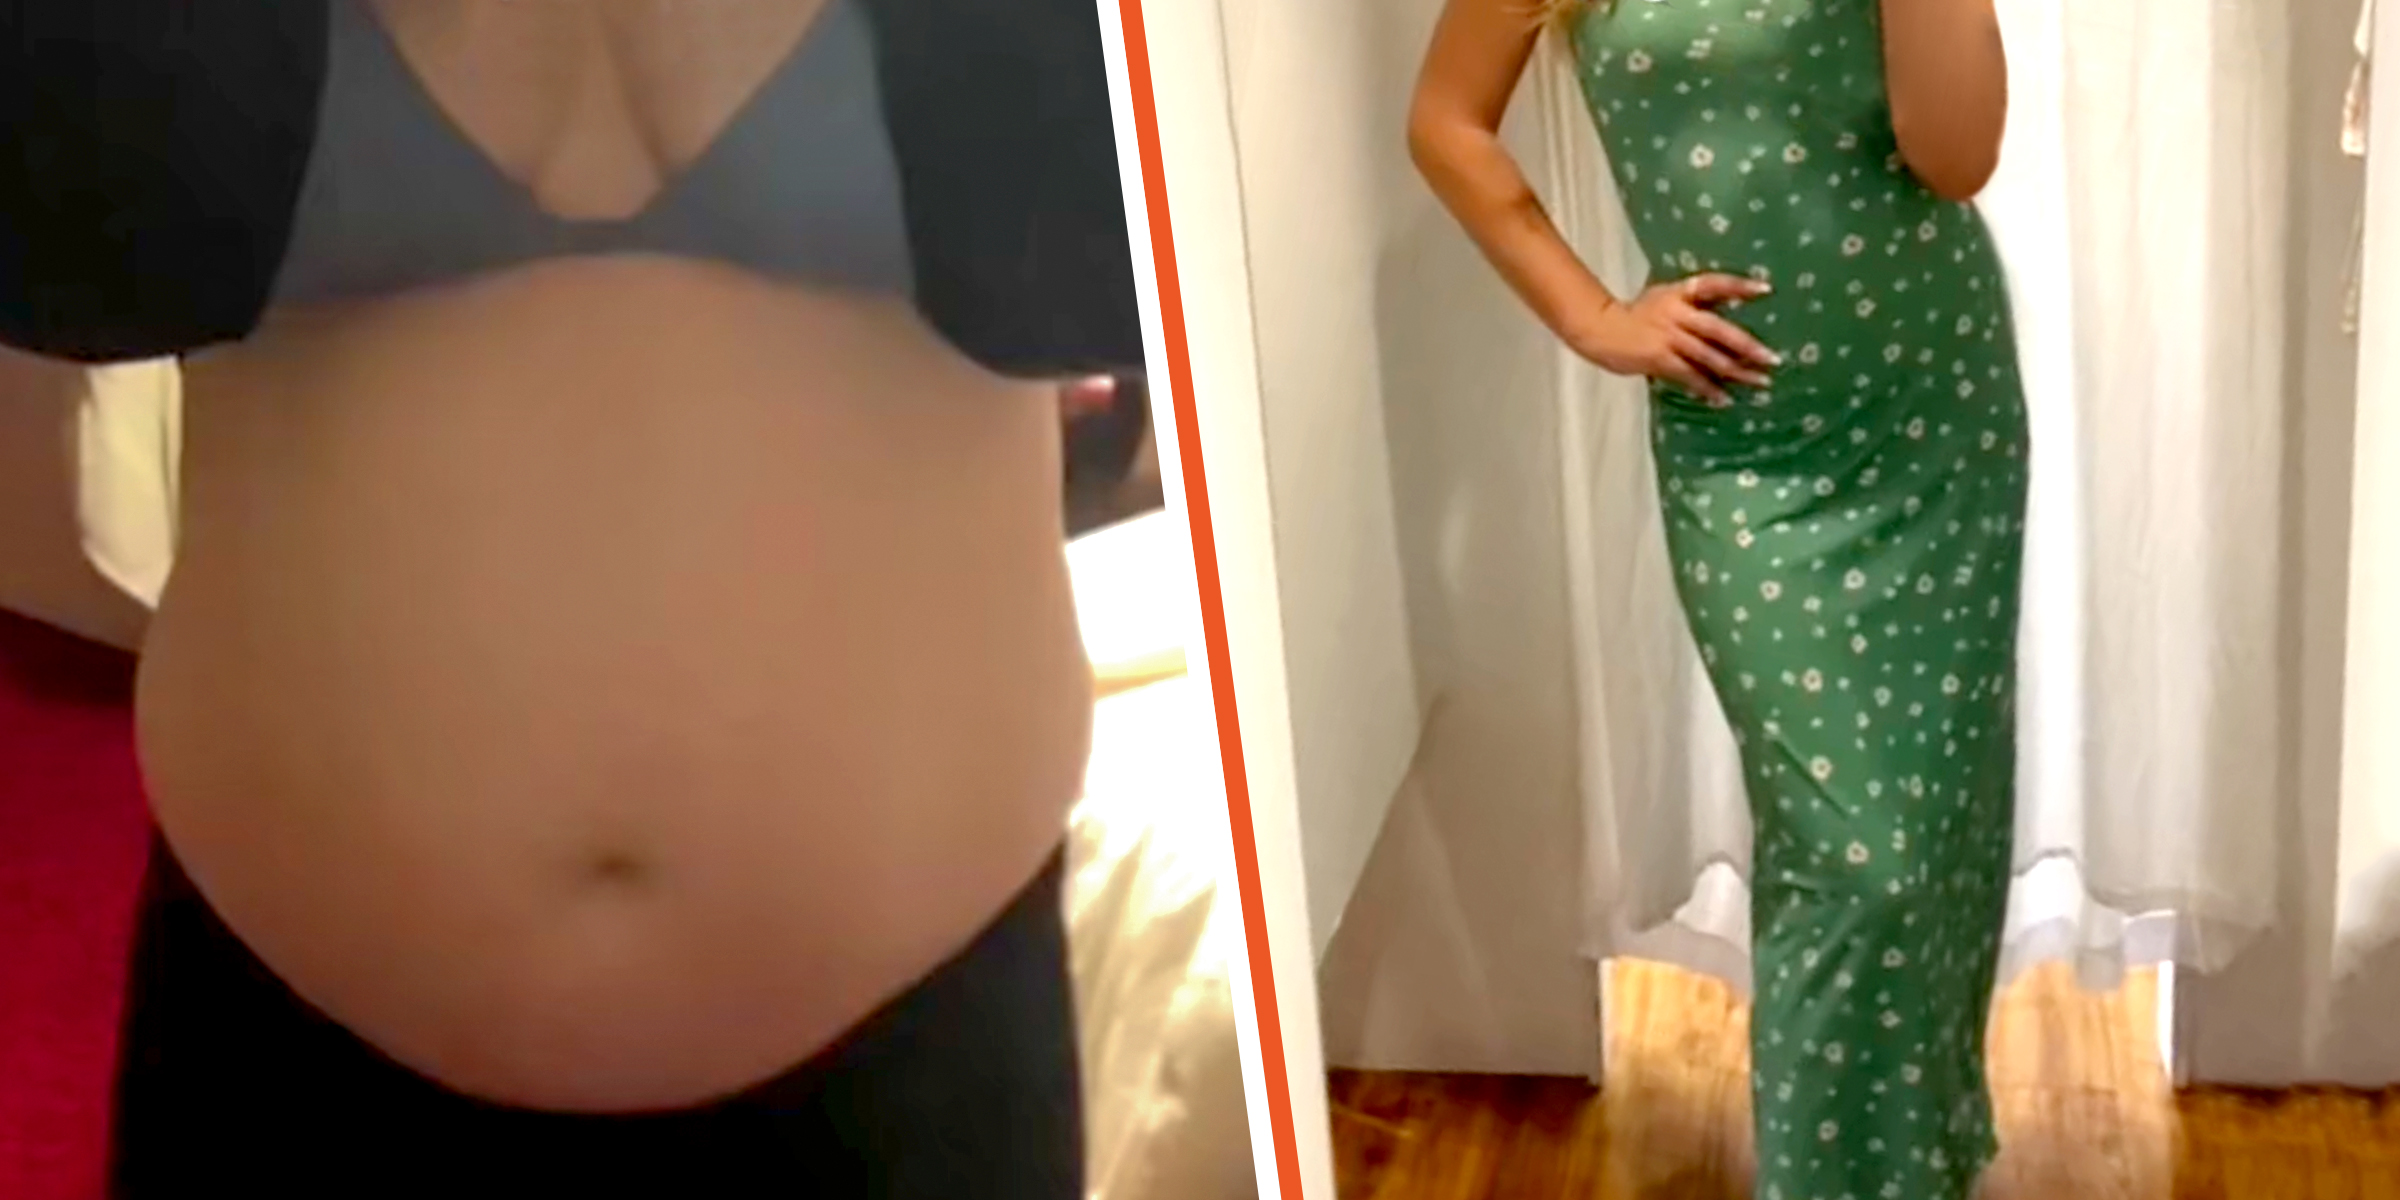 Colleen avant et après avoir perdu 16 kilos | Source : tiktok.com/@queenxxcolleen